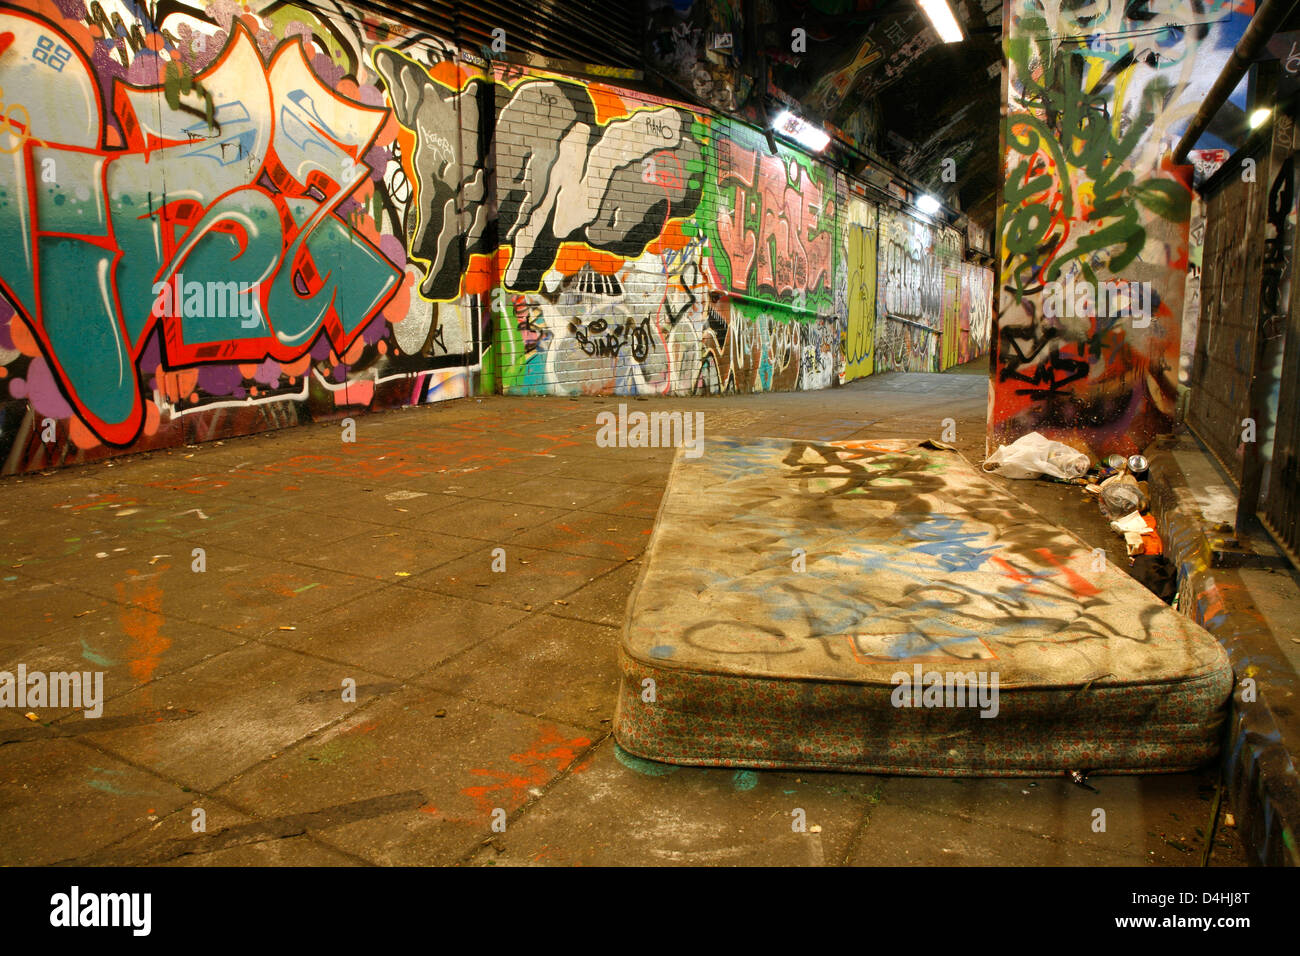 Graffiti-covered walls and mattress in Leake Street underneath Waterloo Station, Waterloo, London, UK Stock Photo